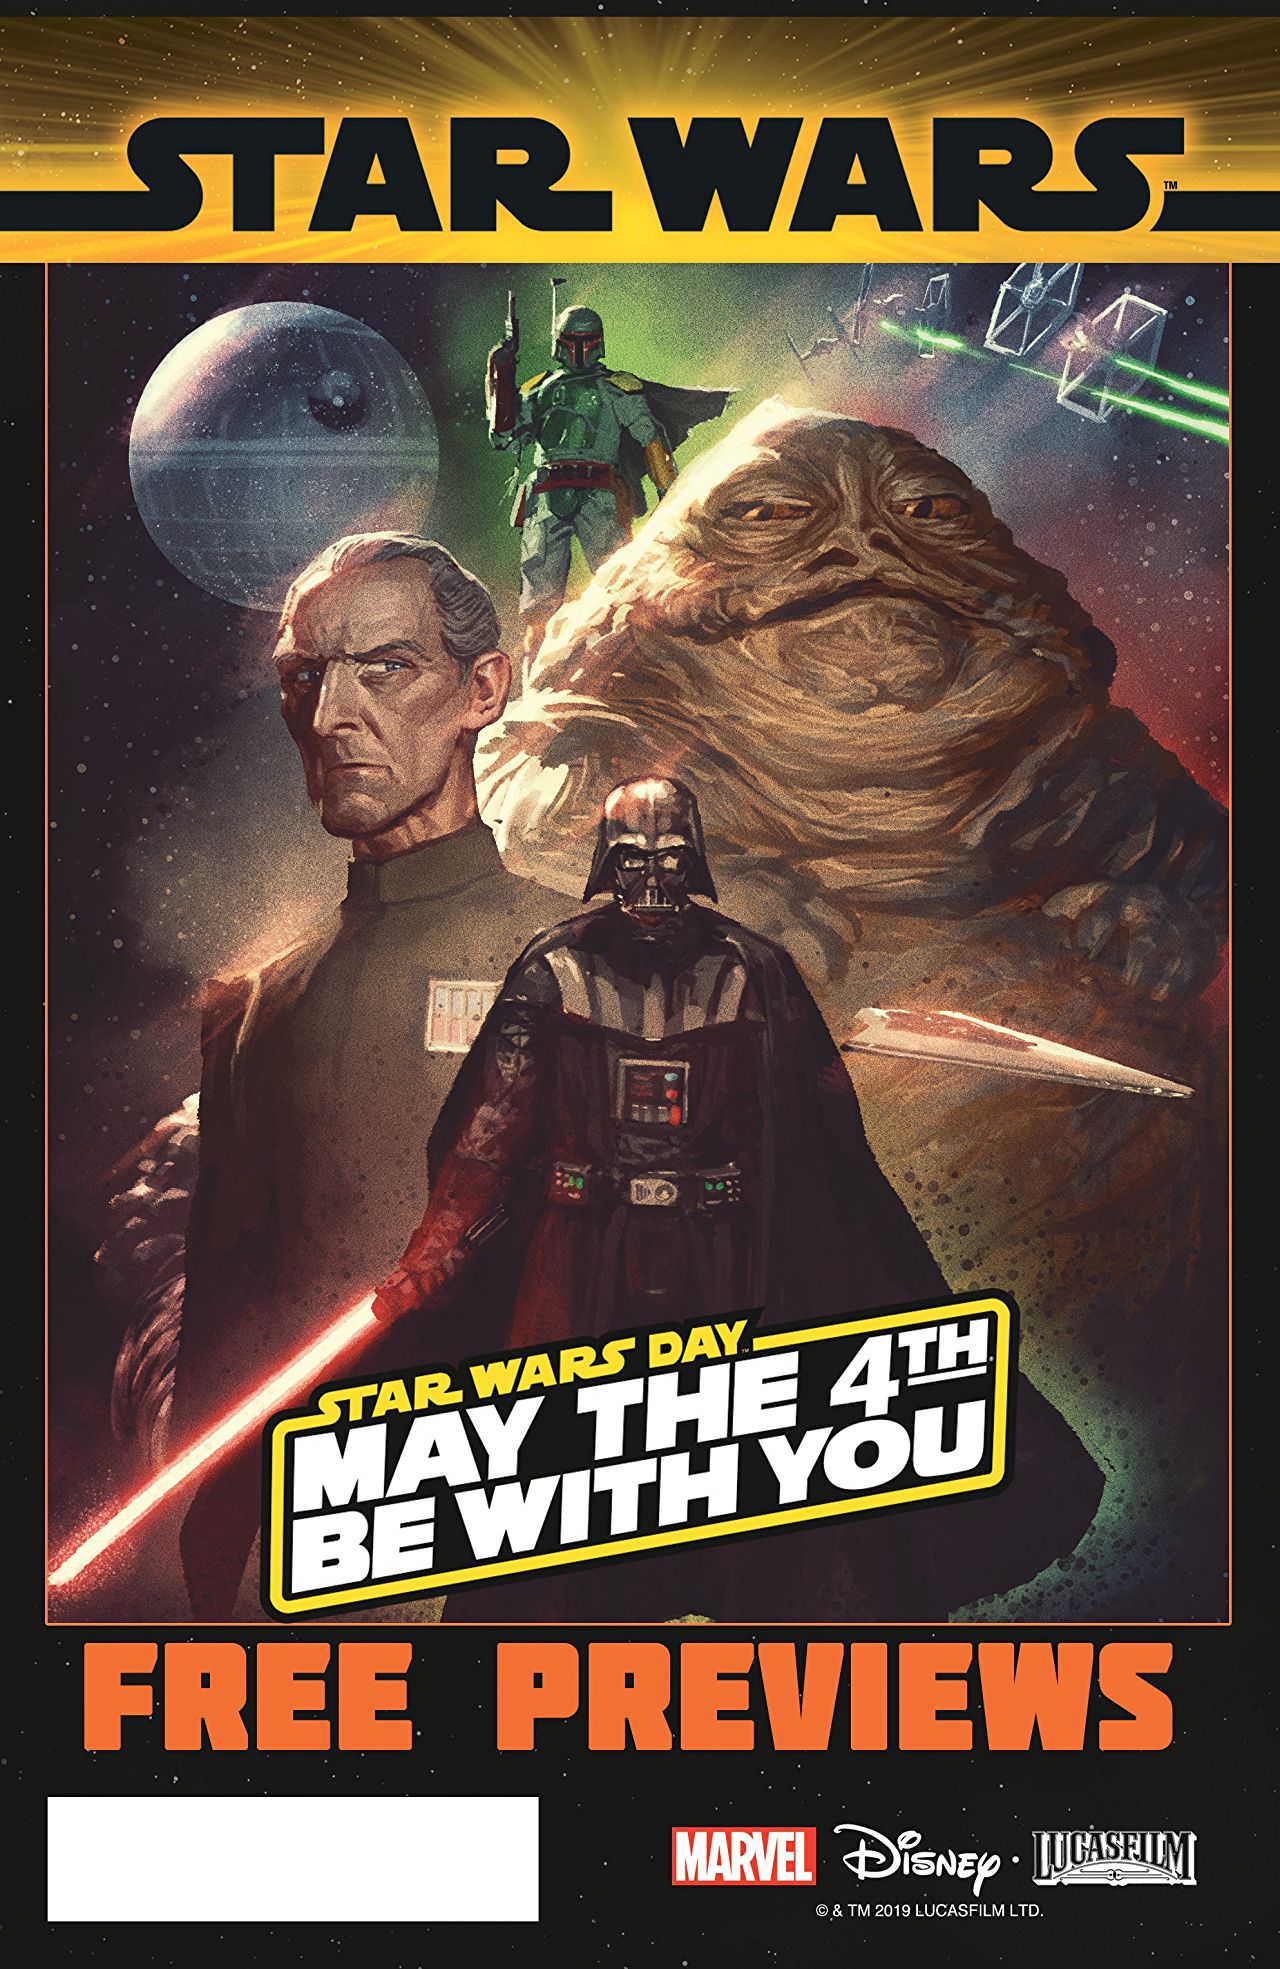 Star Wars May The 4th Previews